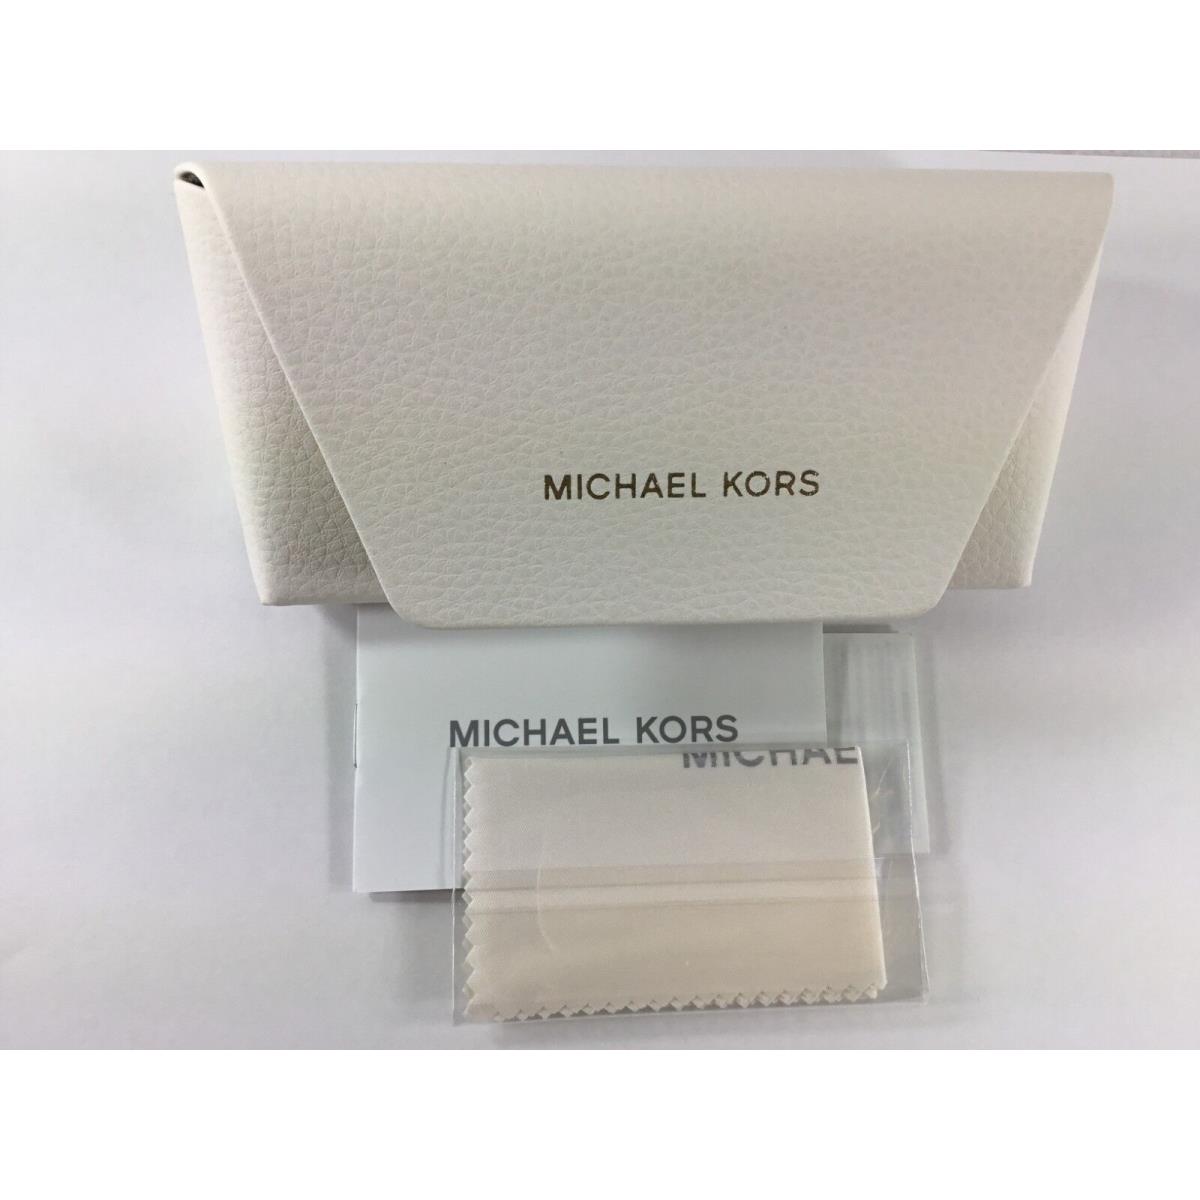 Michael Kors sunglasses  - Brown , Transparent brown and gold Frame, Brown grey Gradient Lens 5